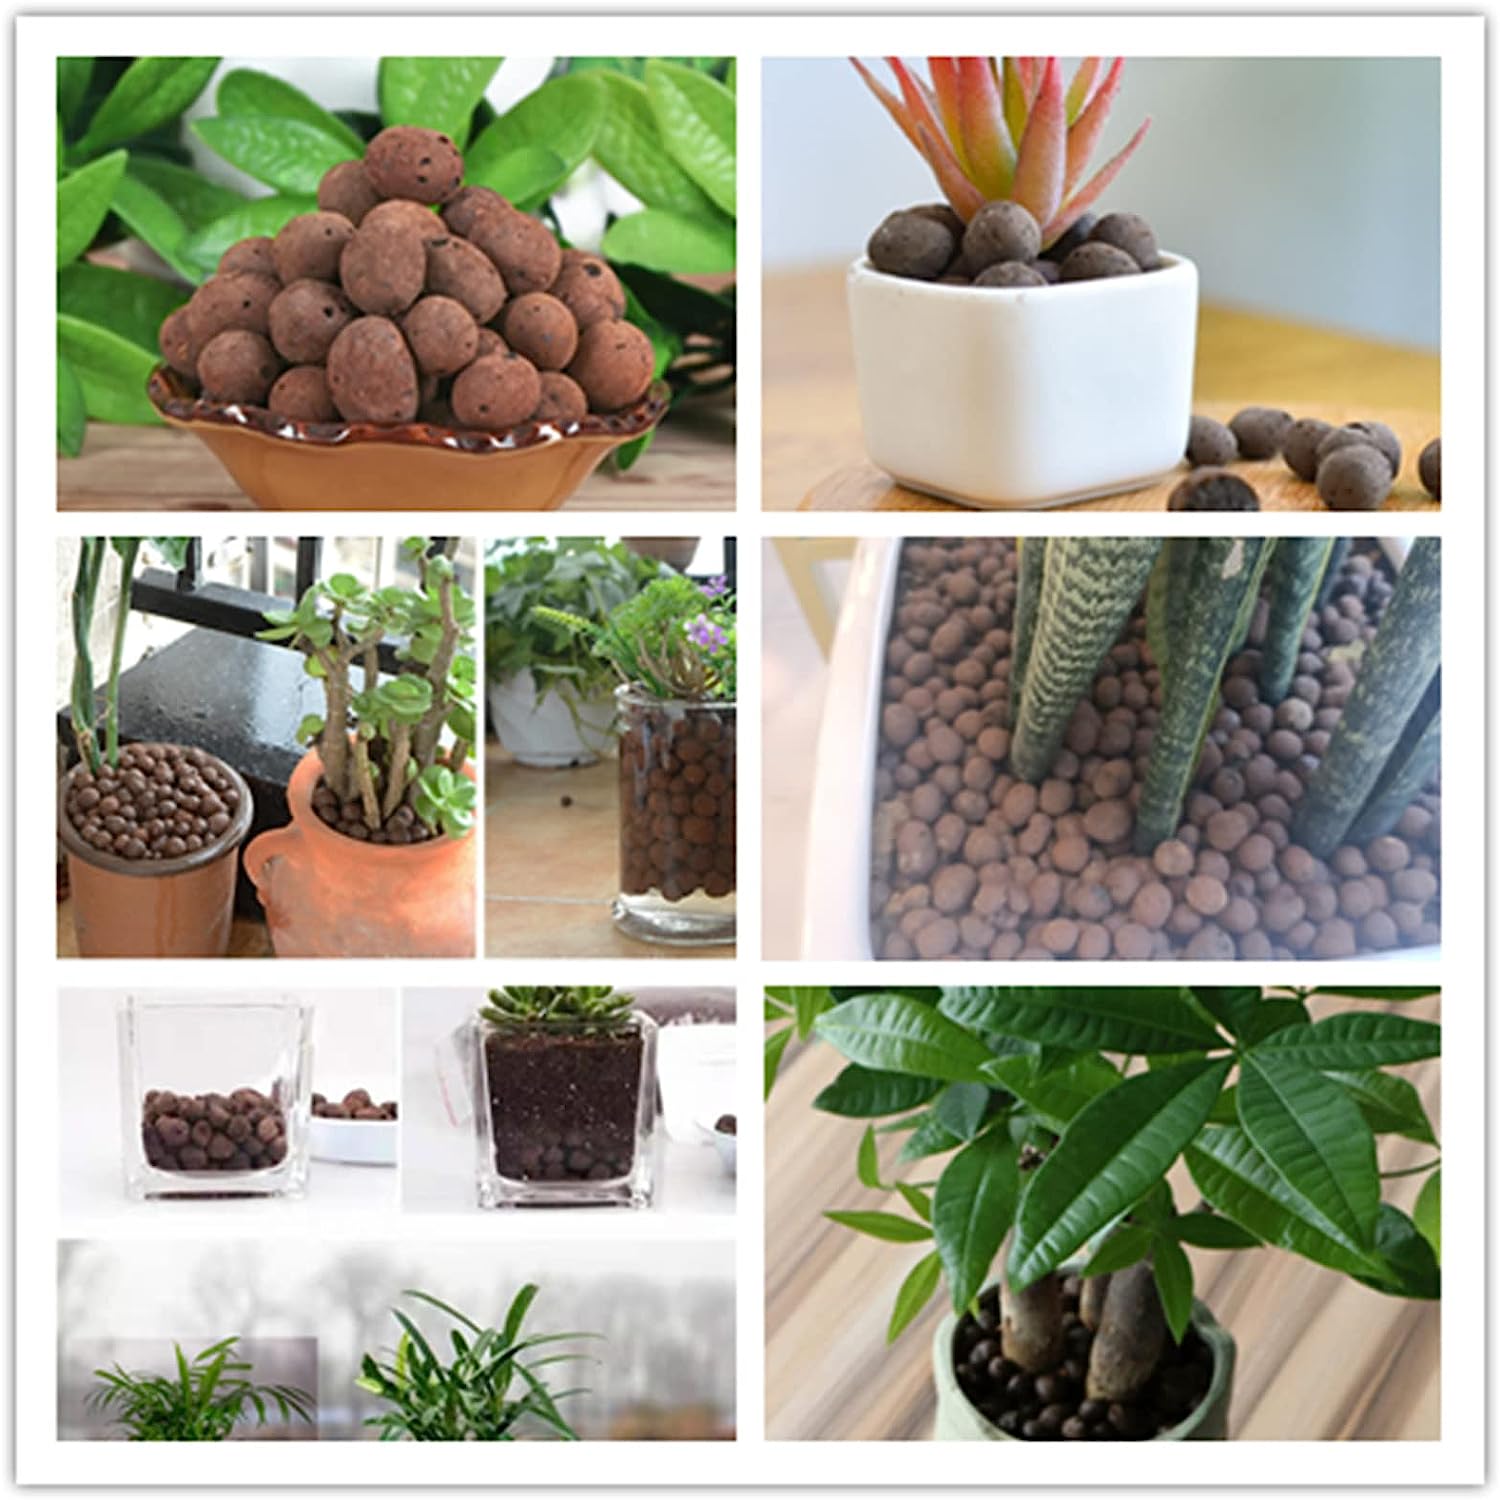 asia_mall_s.a - Arcilla expandida para plantas 🎍 . . .